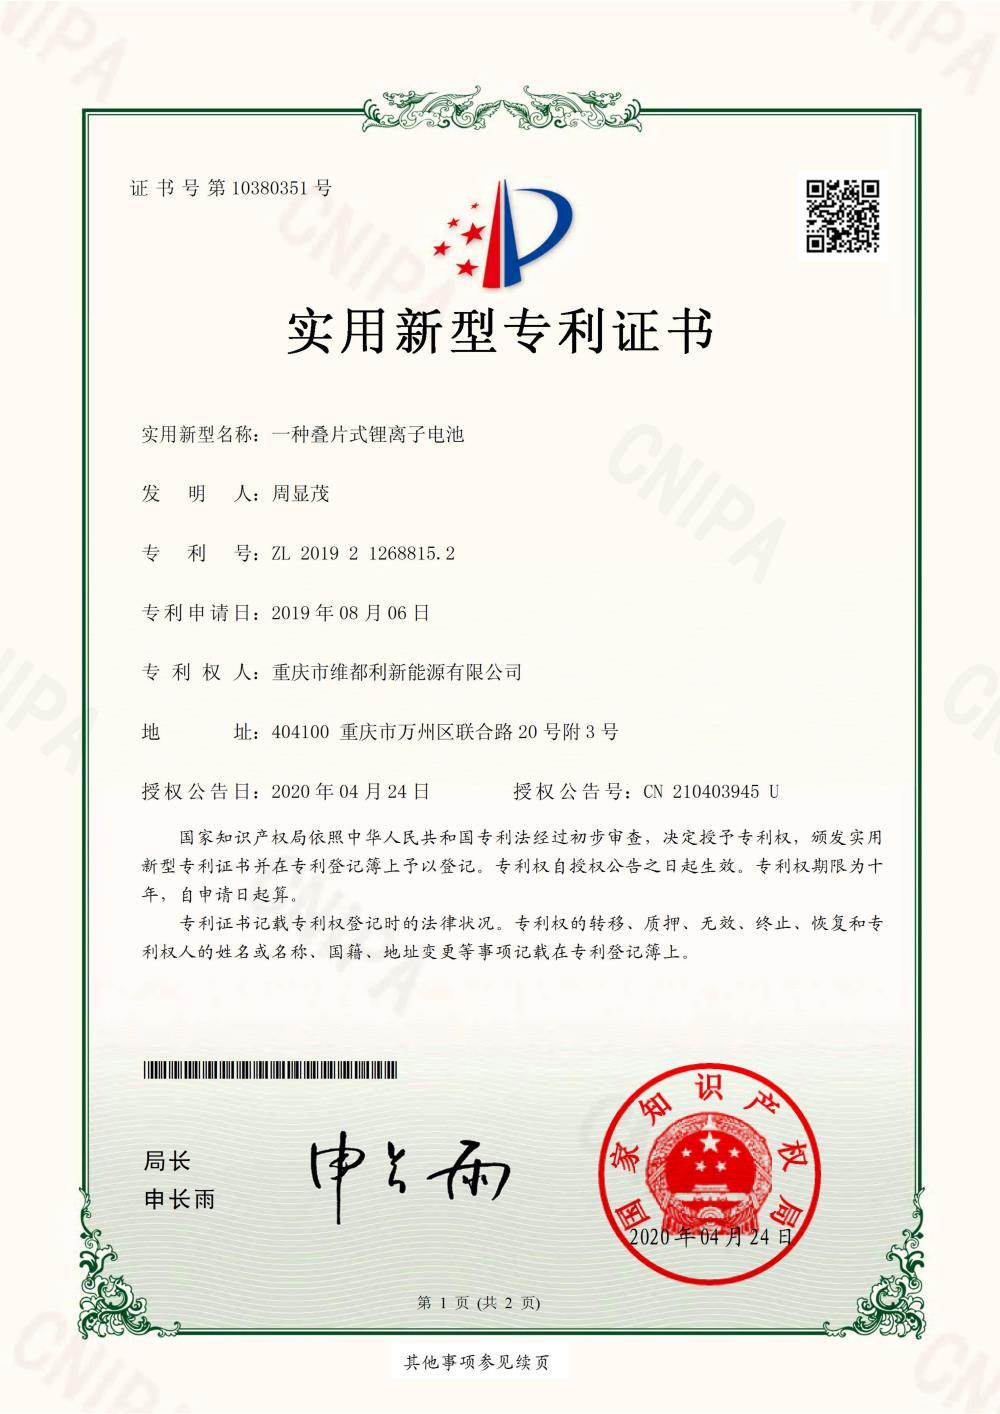 Practical-Certificate